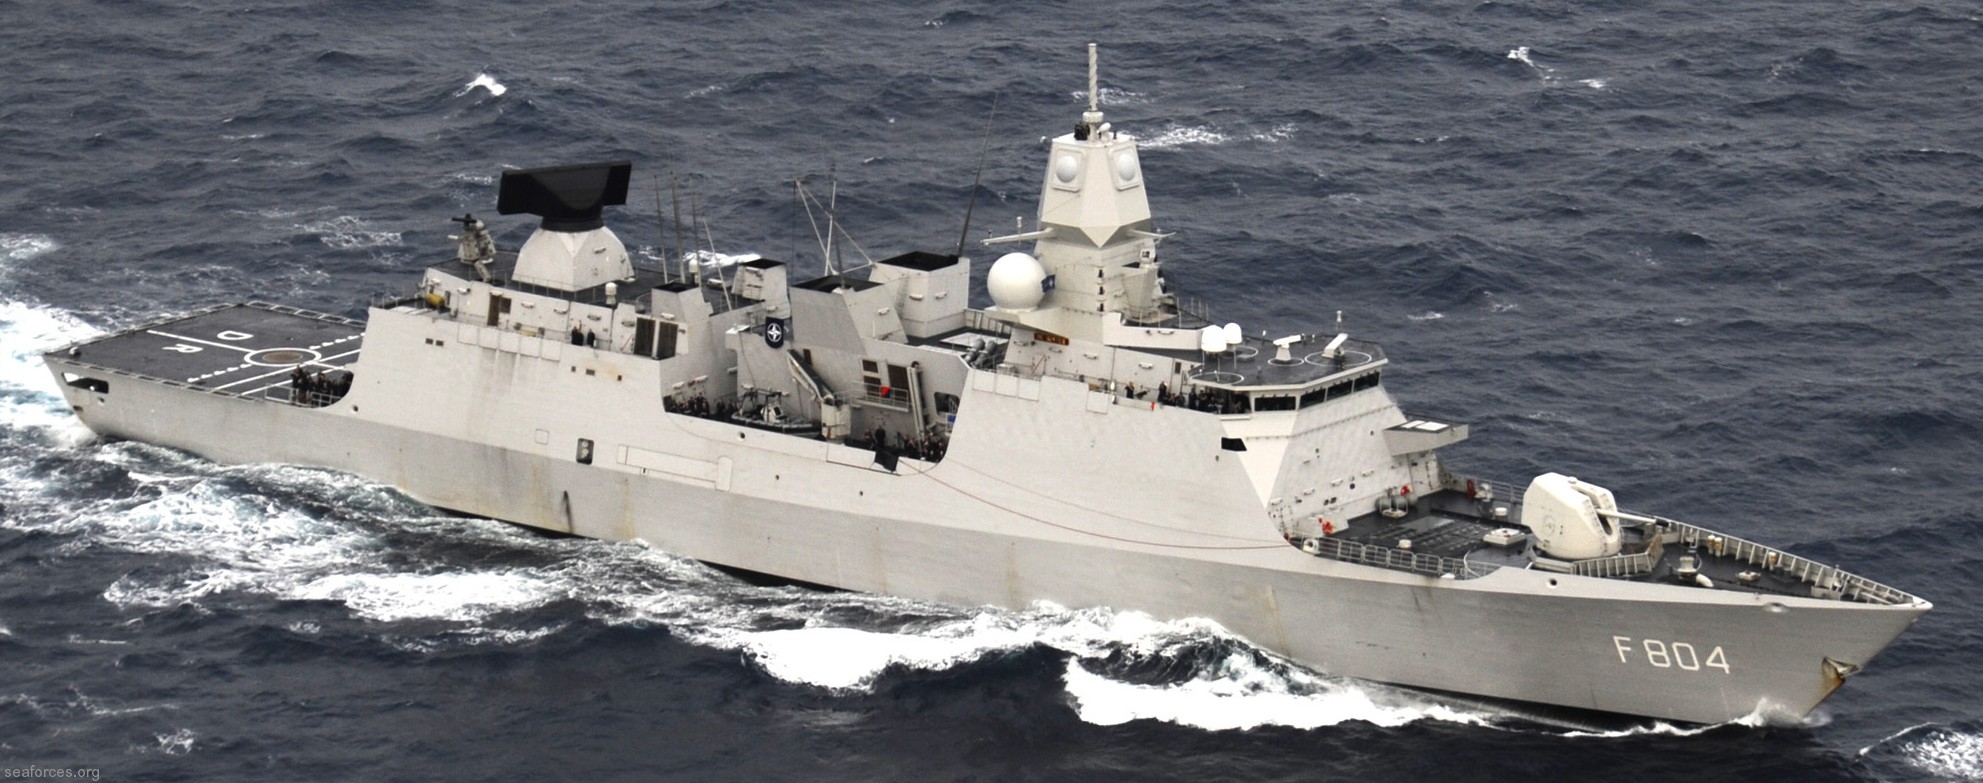 f-804 hnlms de ruyter guided missile frigate ffg lcf royal netherlands navy 13 de zeven provincien class